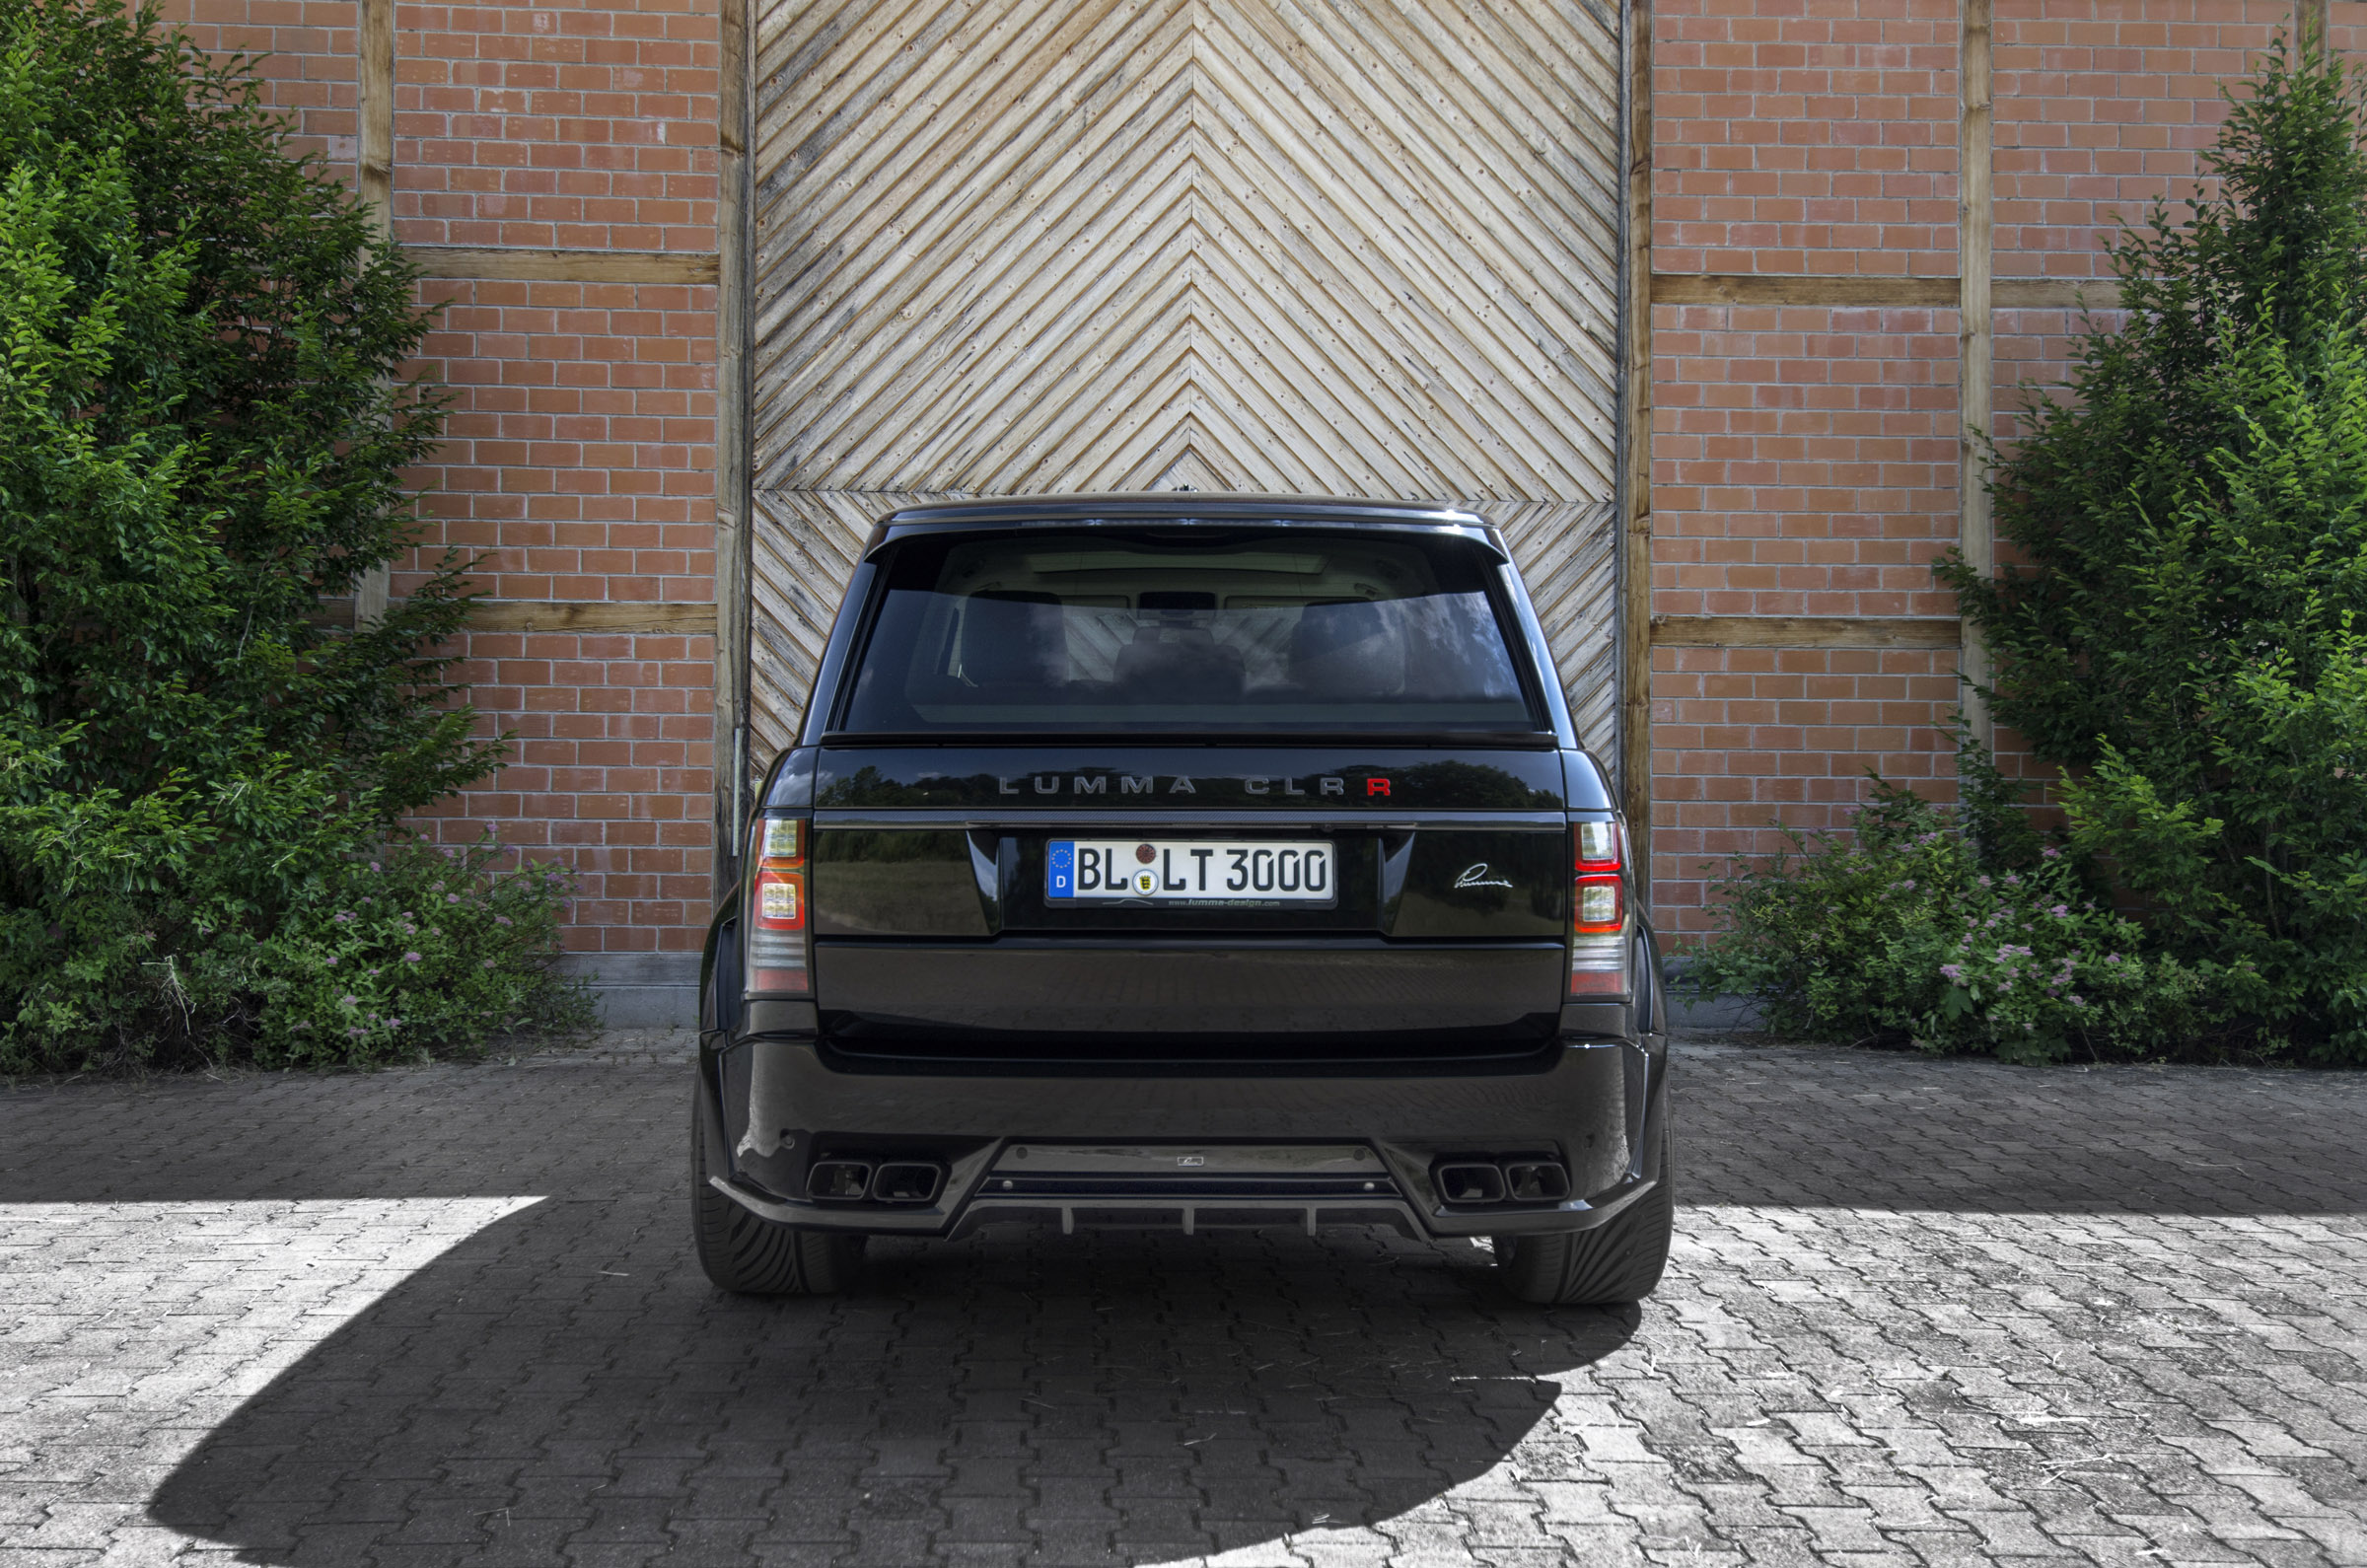 Lumma Design Range Rover CLR R Carbon